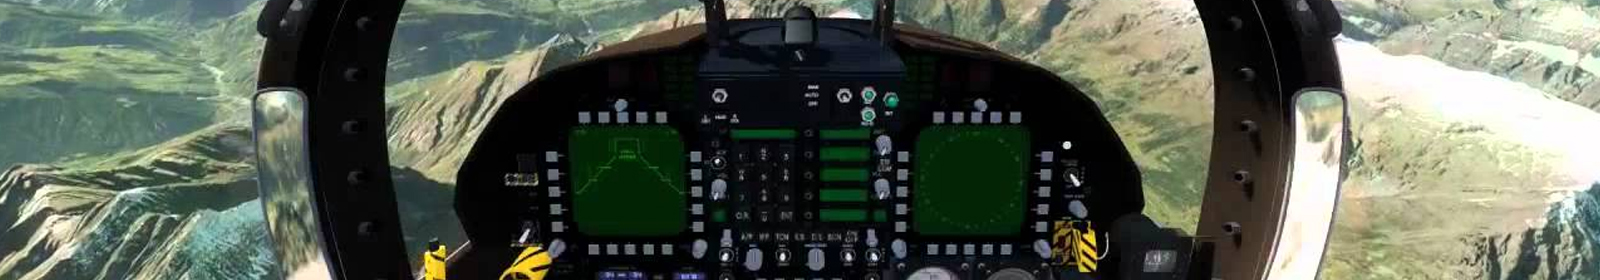 O primeiro simulador de voo para helicópteros Airbus EC175